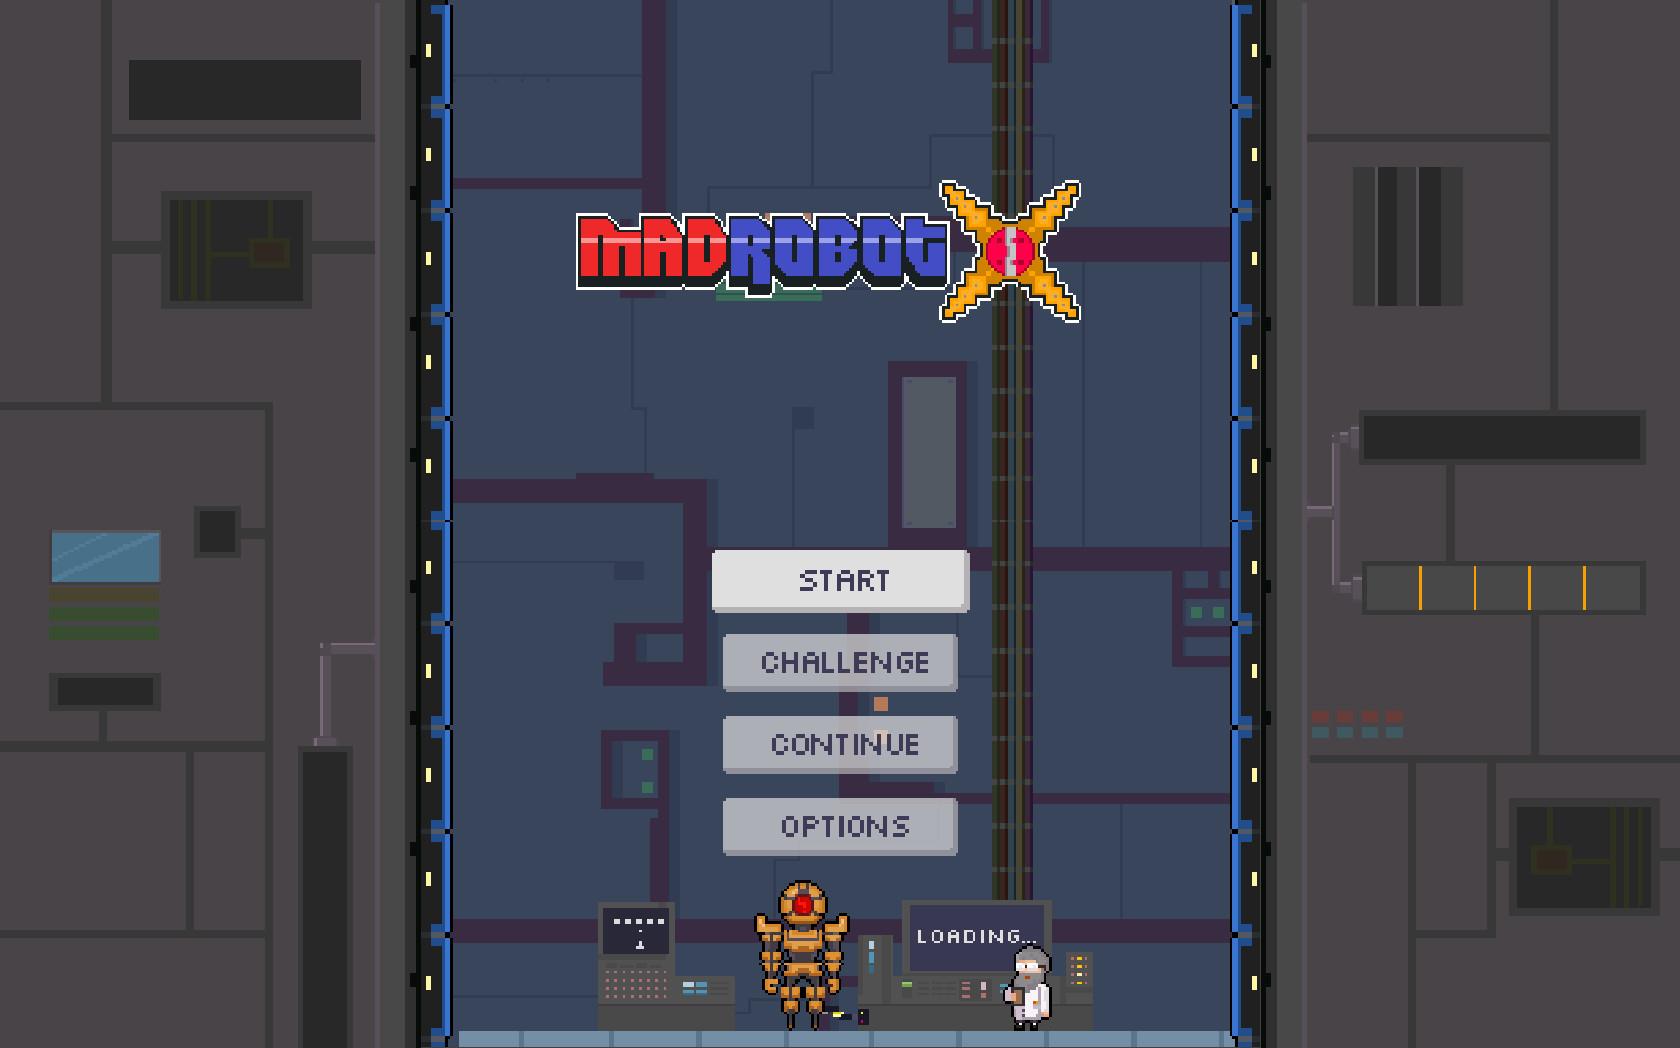 Screenshot №12 from game Madrobot X